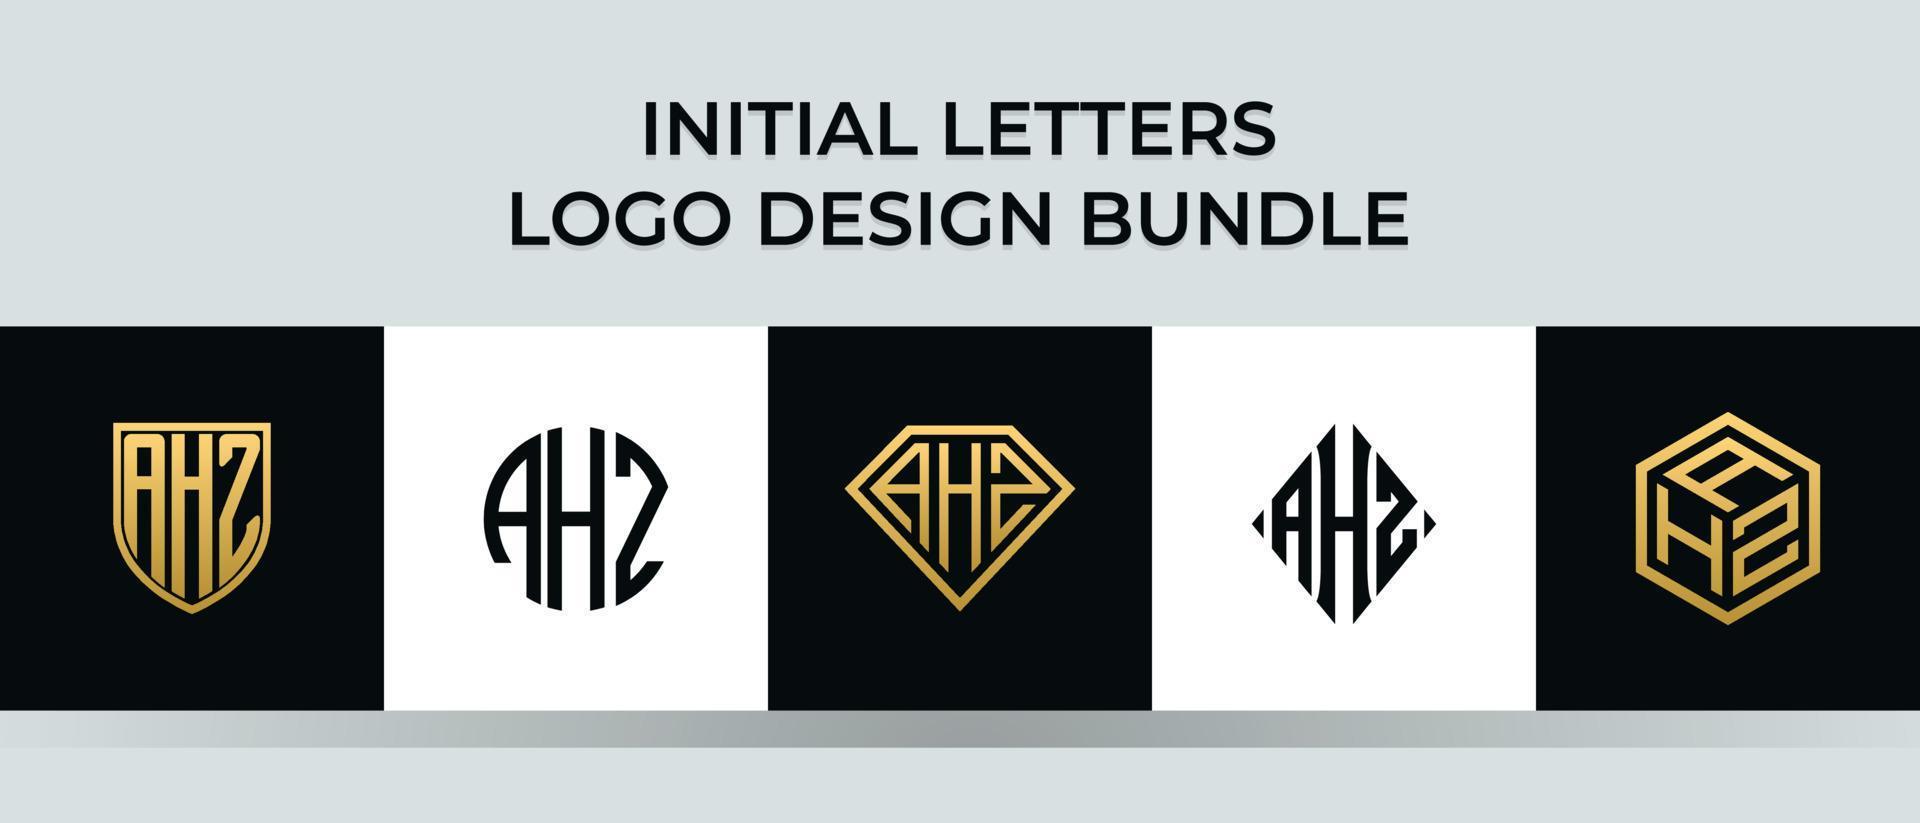 lettere iniziali ahz logo design bundle vettore